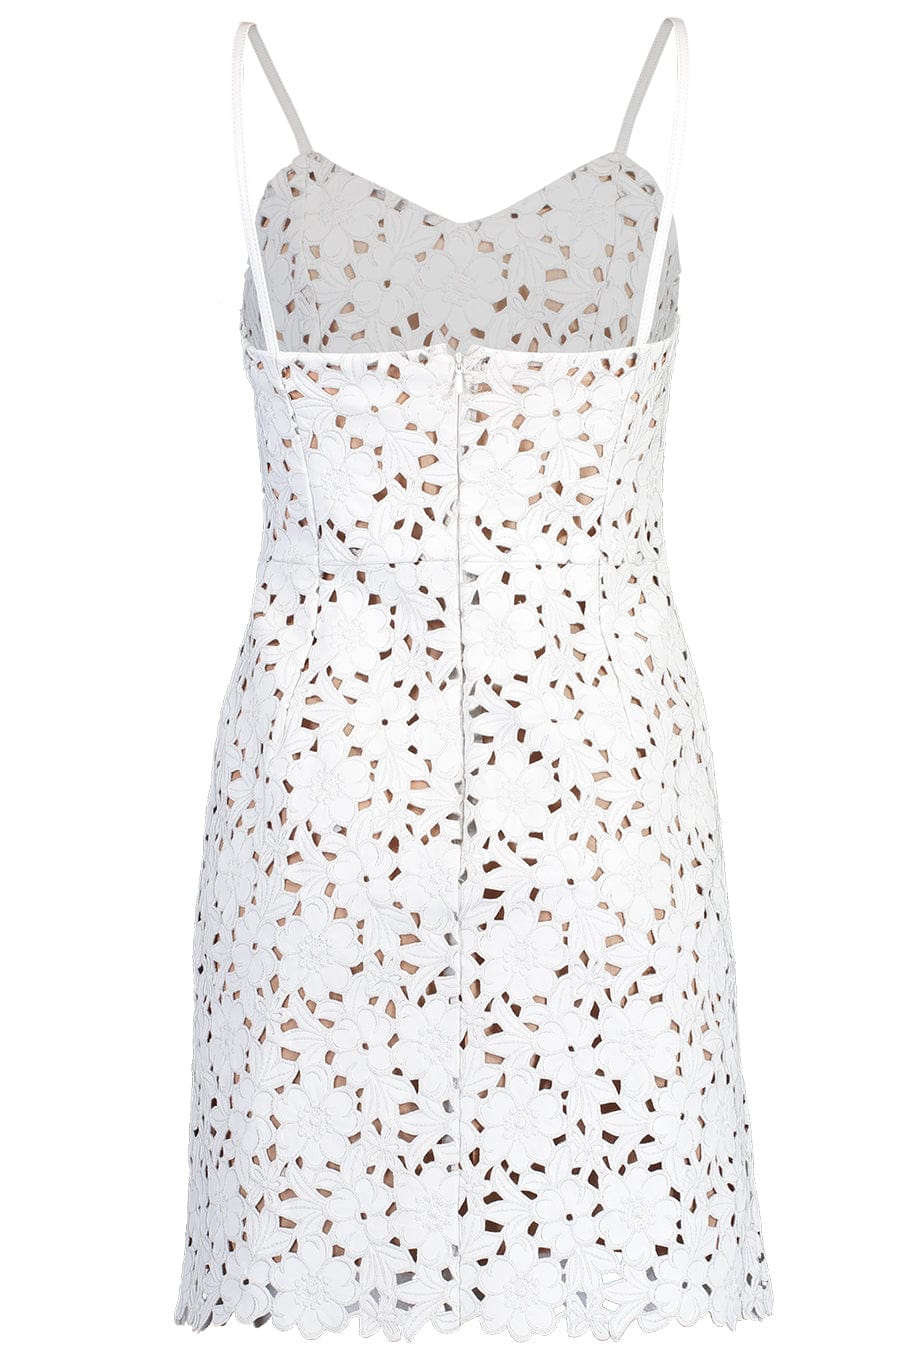 MICHAEL KORS-Floral Leather Slip Dress-OPTIC WHITE